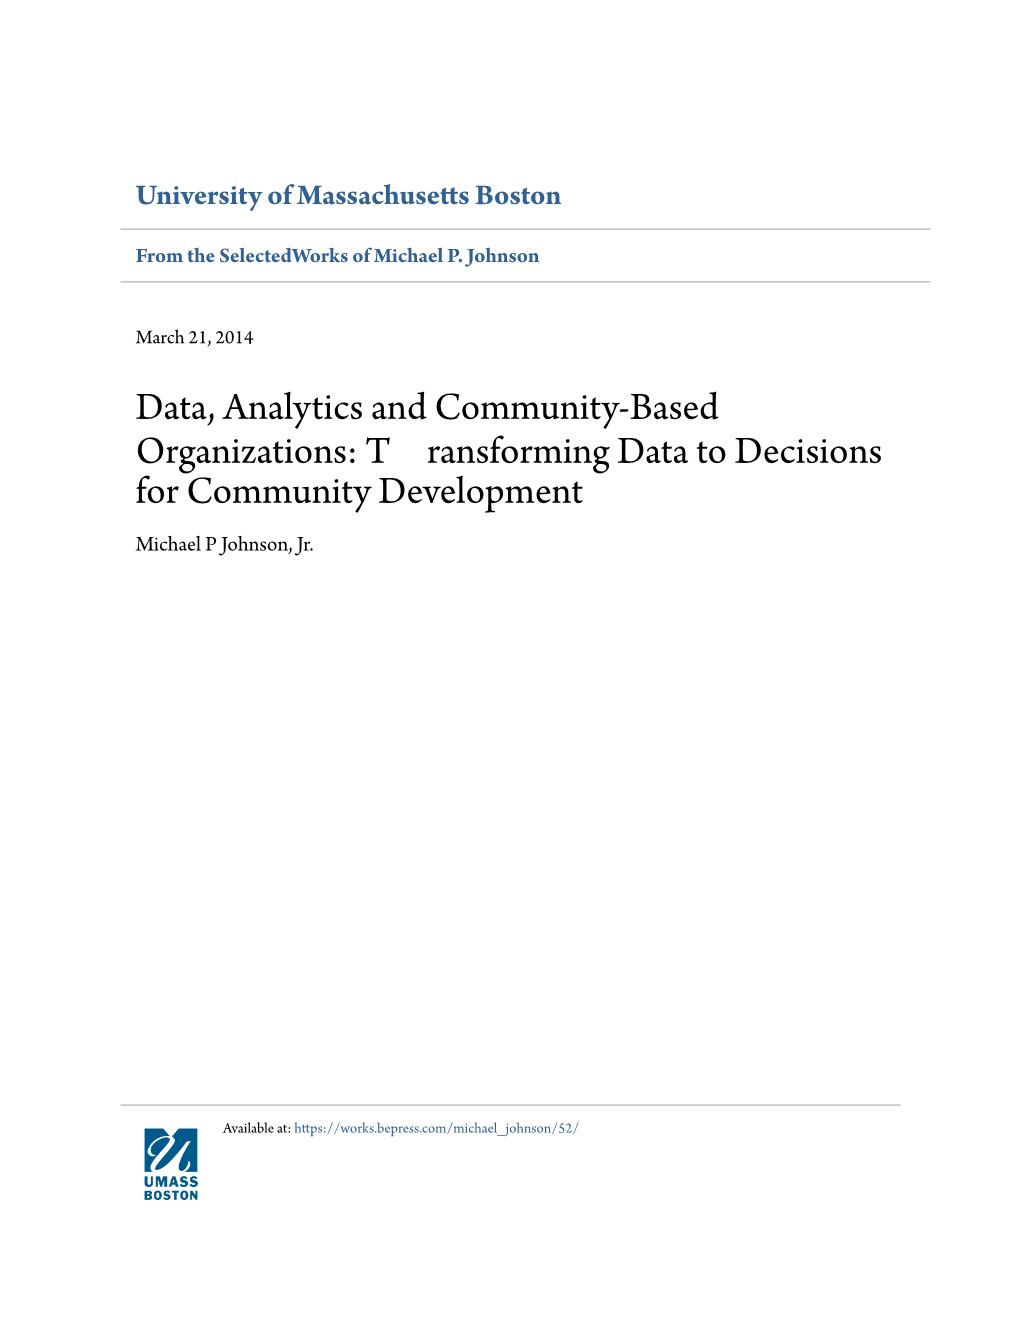 Data, Analytics and Community-Based Organizations: T Ransforming Data to Decisions for Community Development Michael P Johnson, Jr